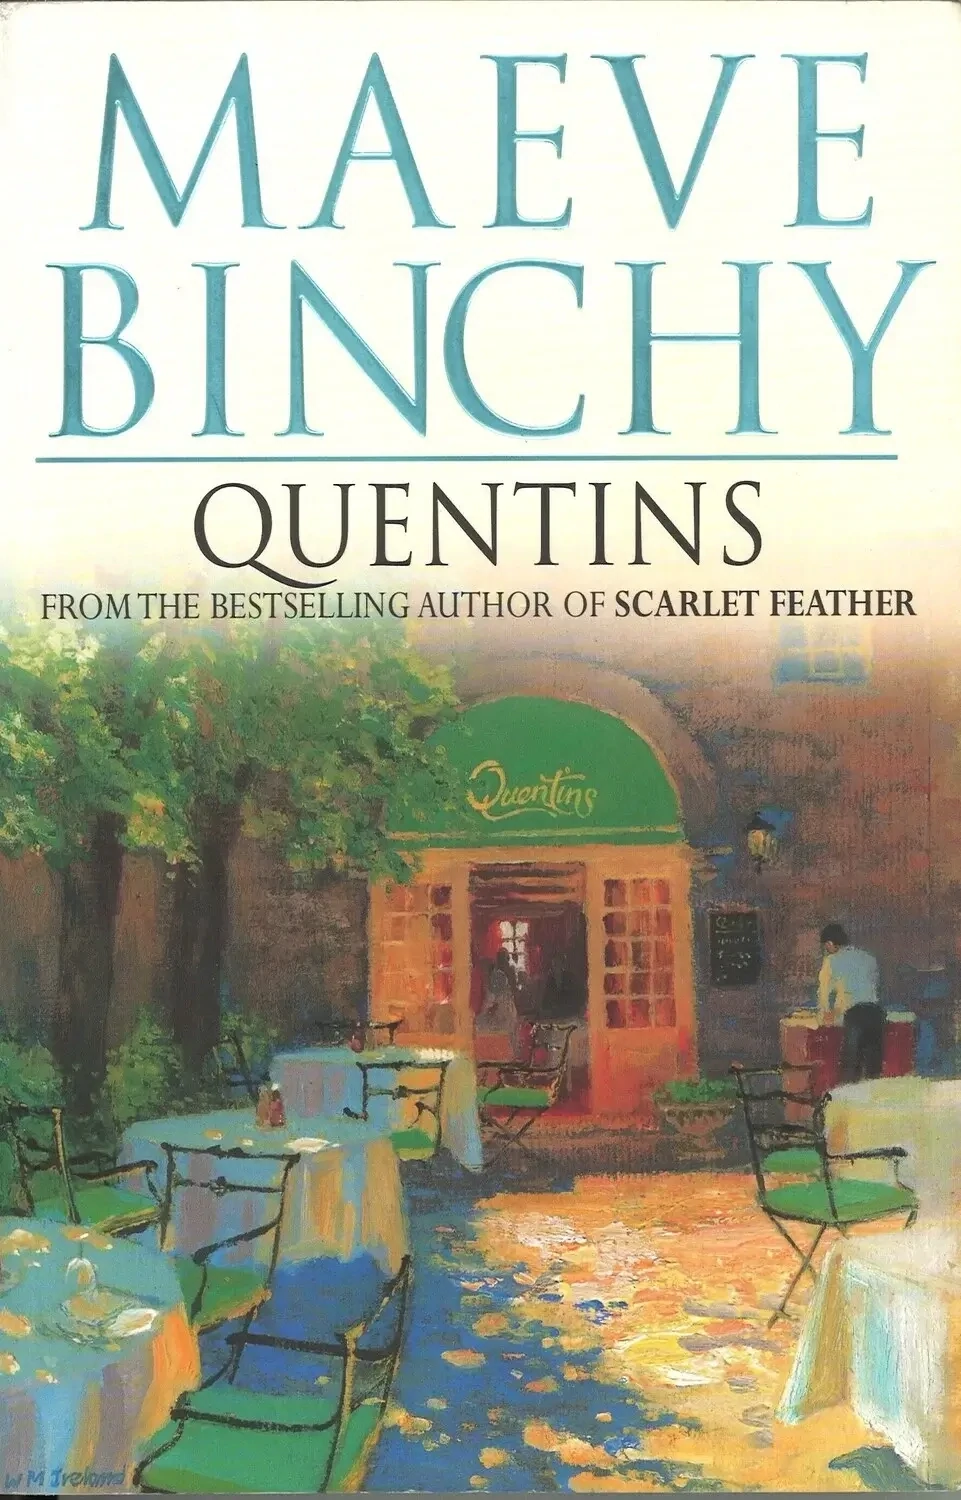 Quentins by Maeve Binchy